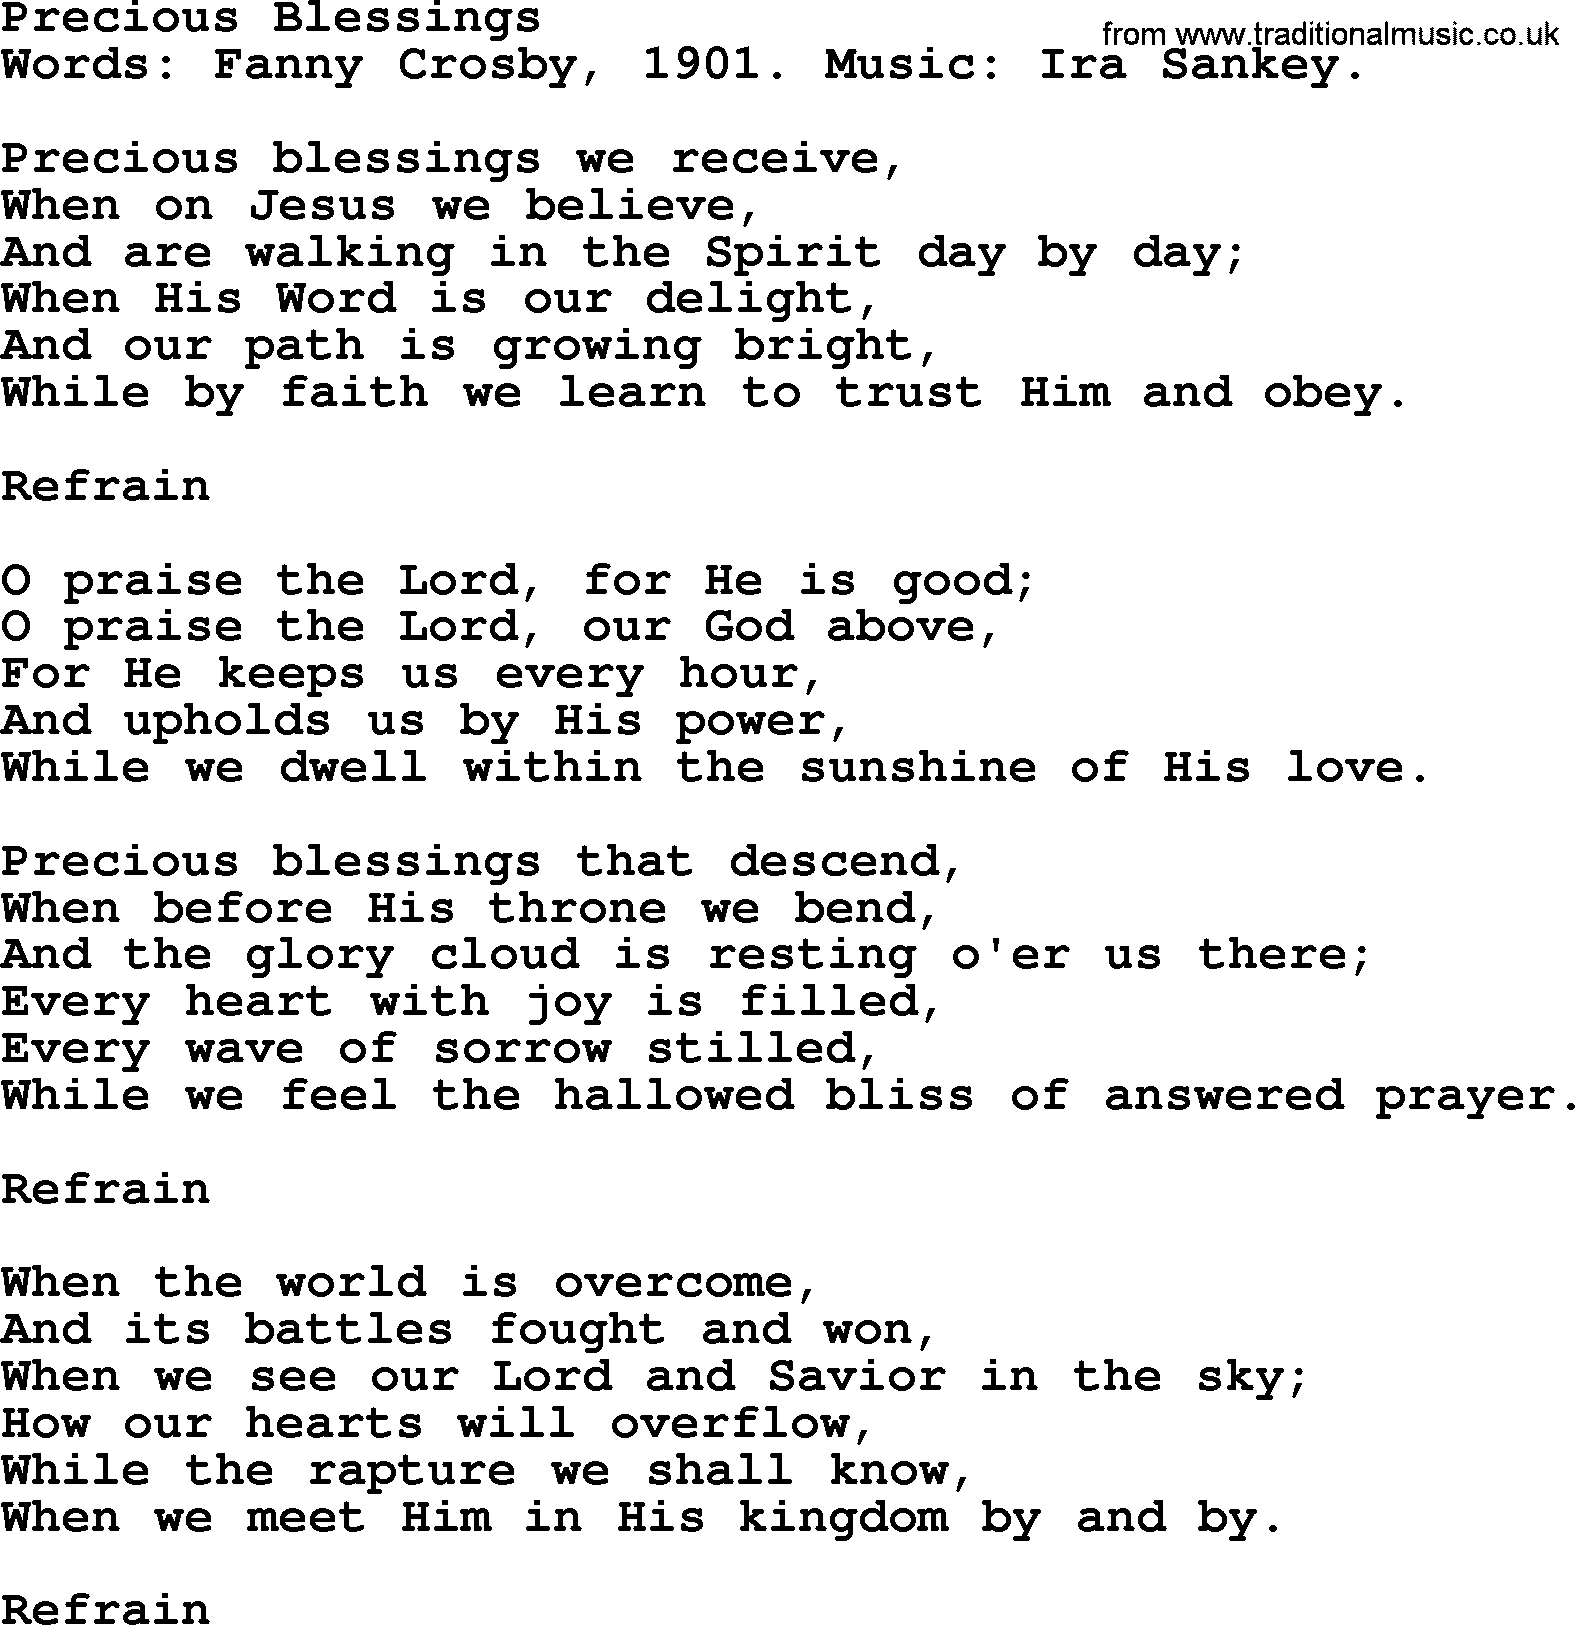 Fanny Crosby song: Precious Blessings, lyrics